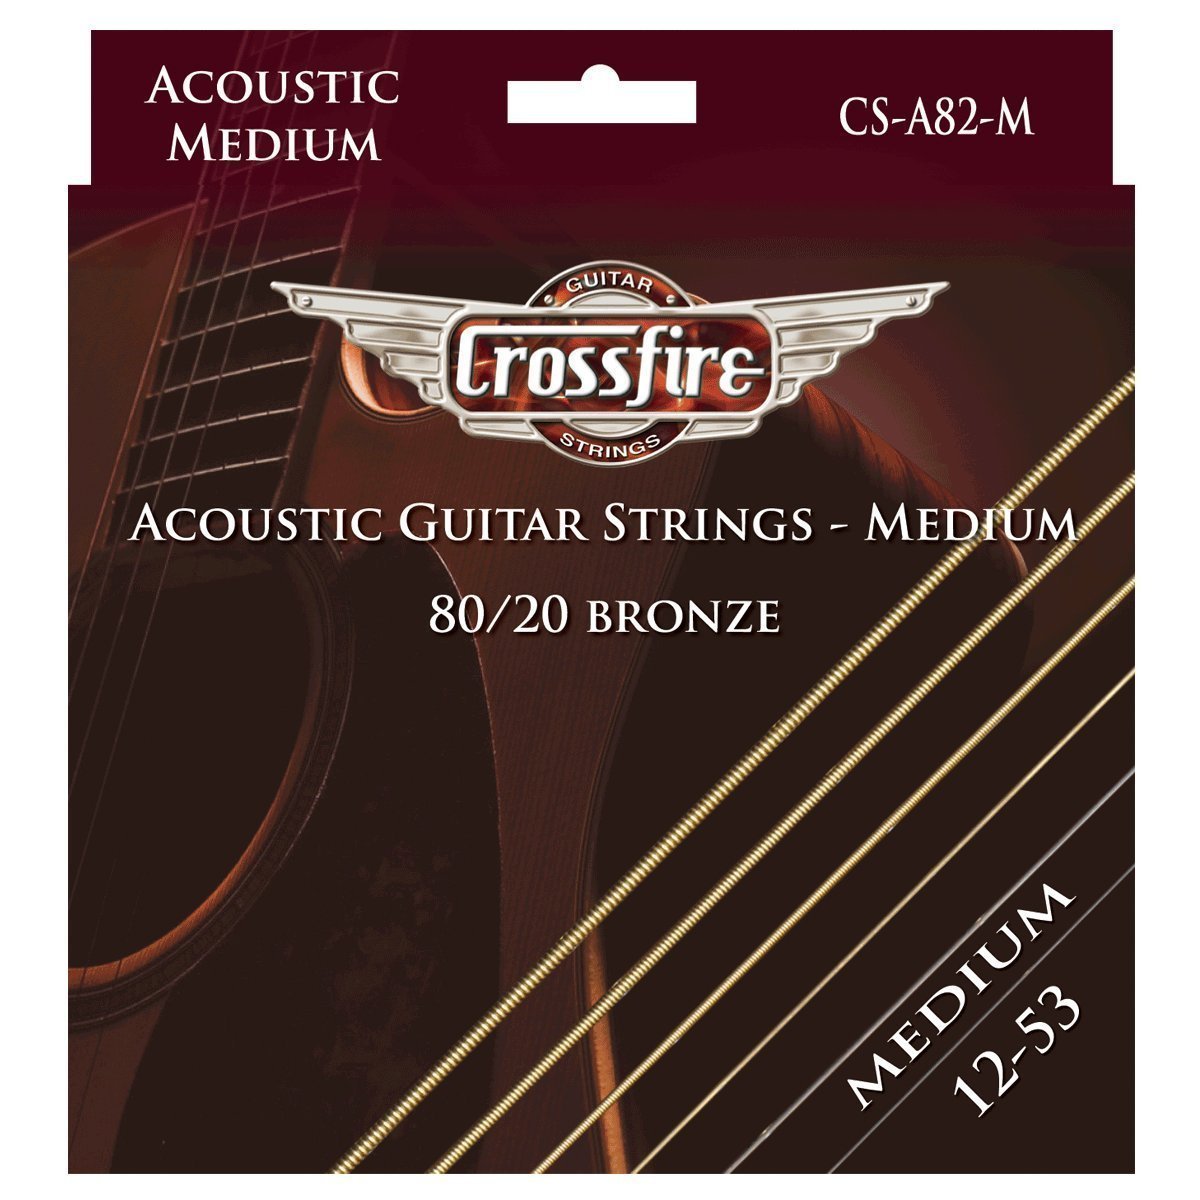 Crossfire Medium 80/20 Bronze Acoustic Guitar Strings (12-53)-CS-A82-M